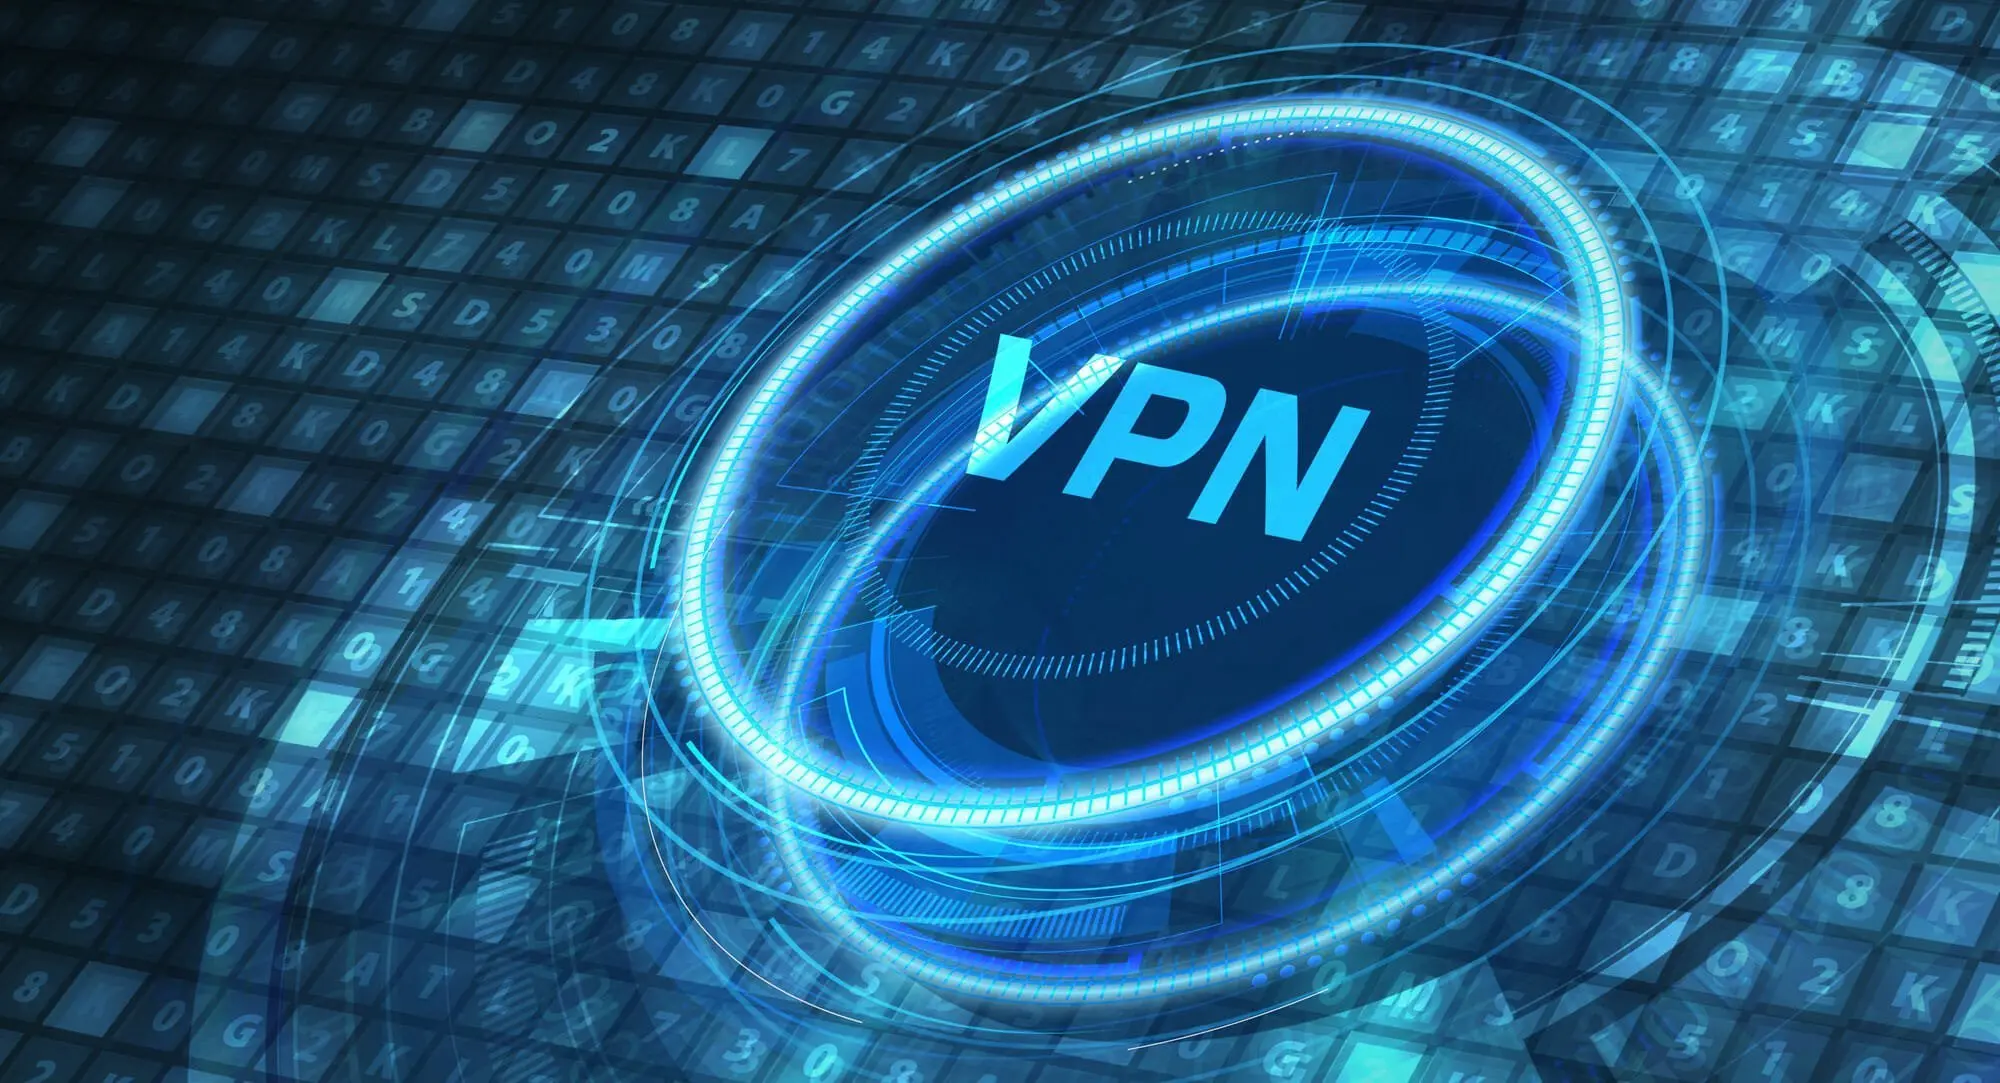 VPN Network